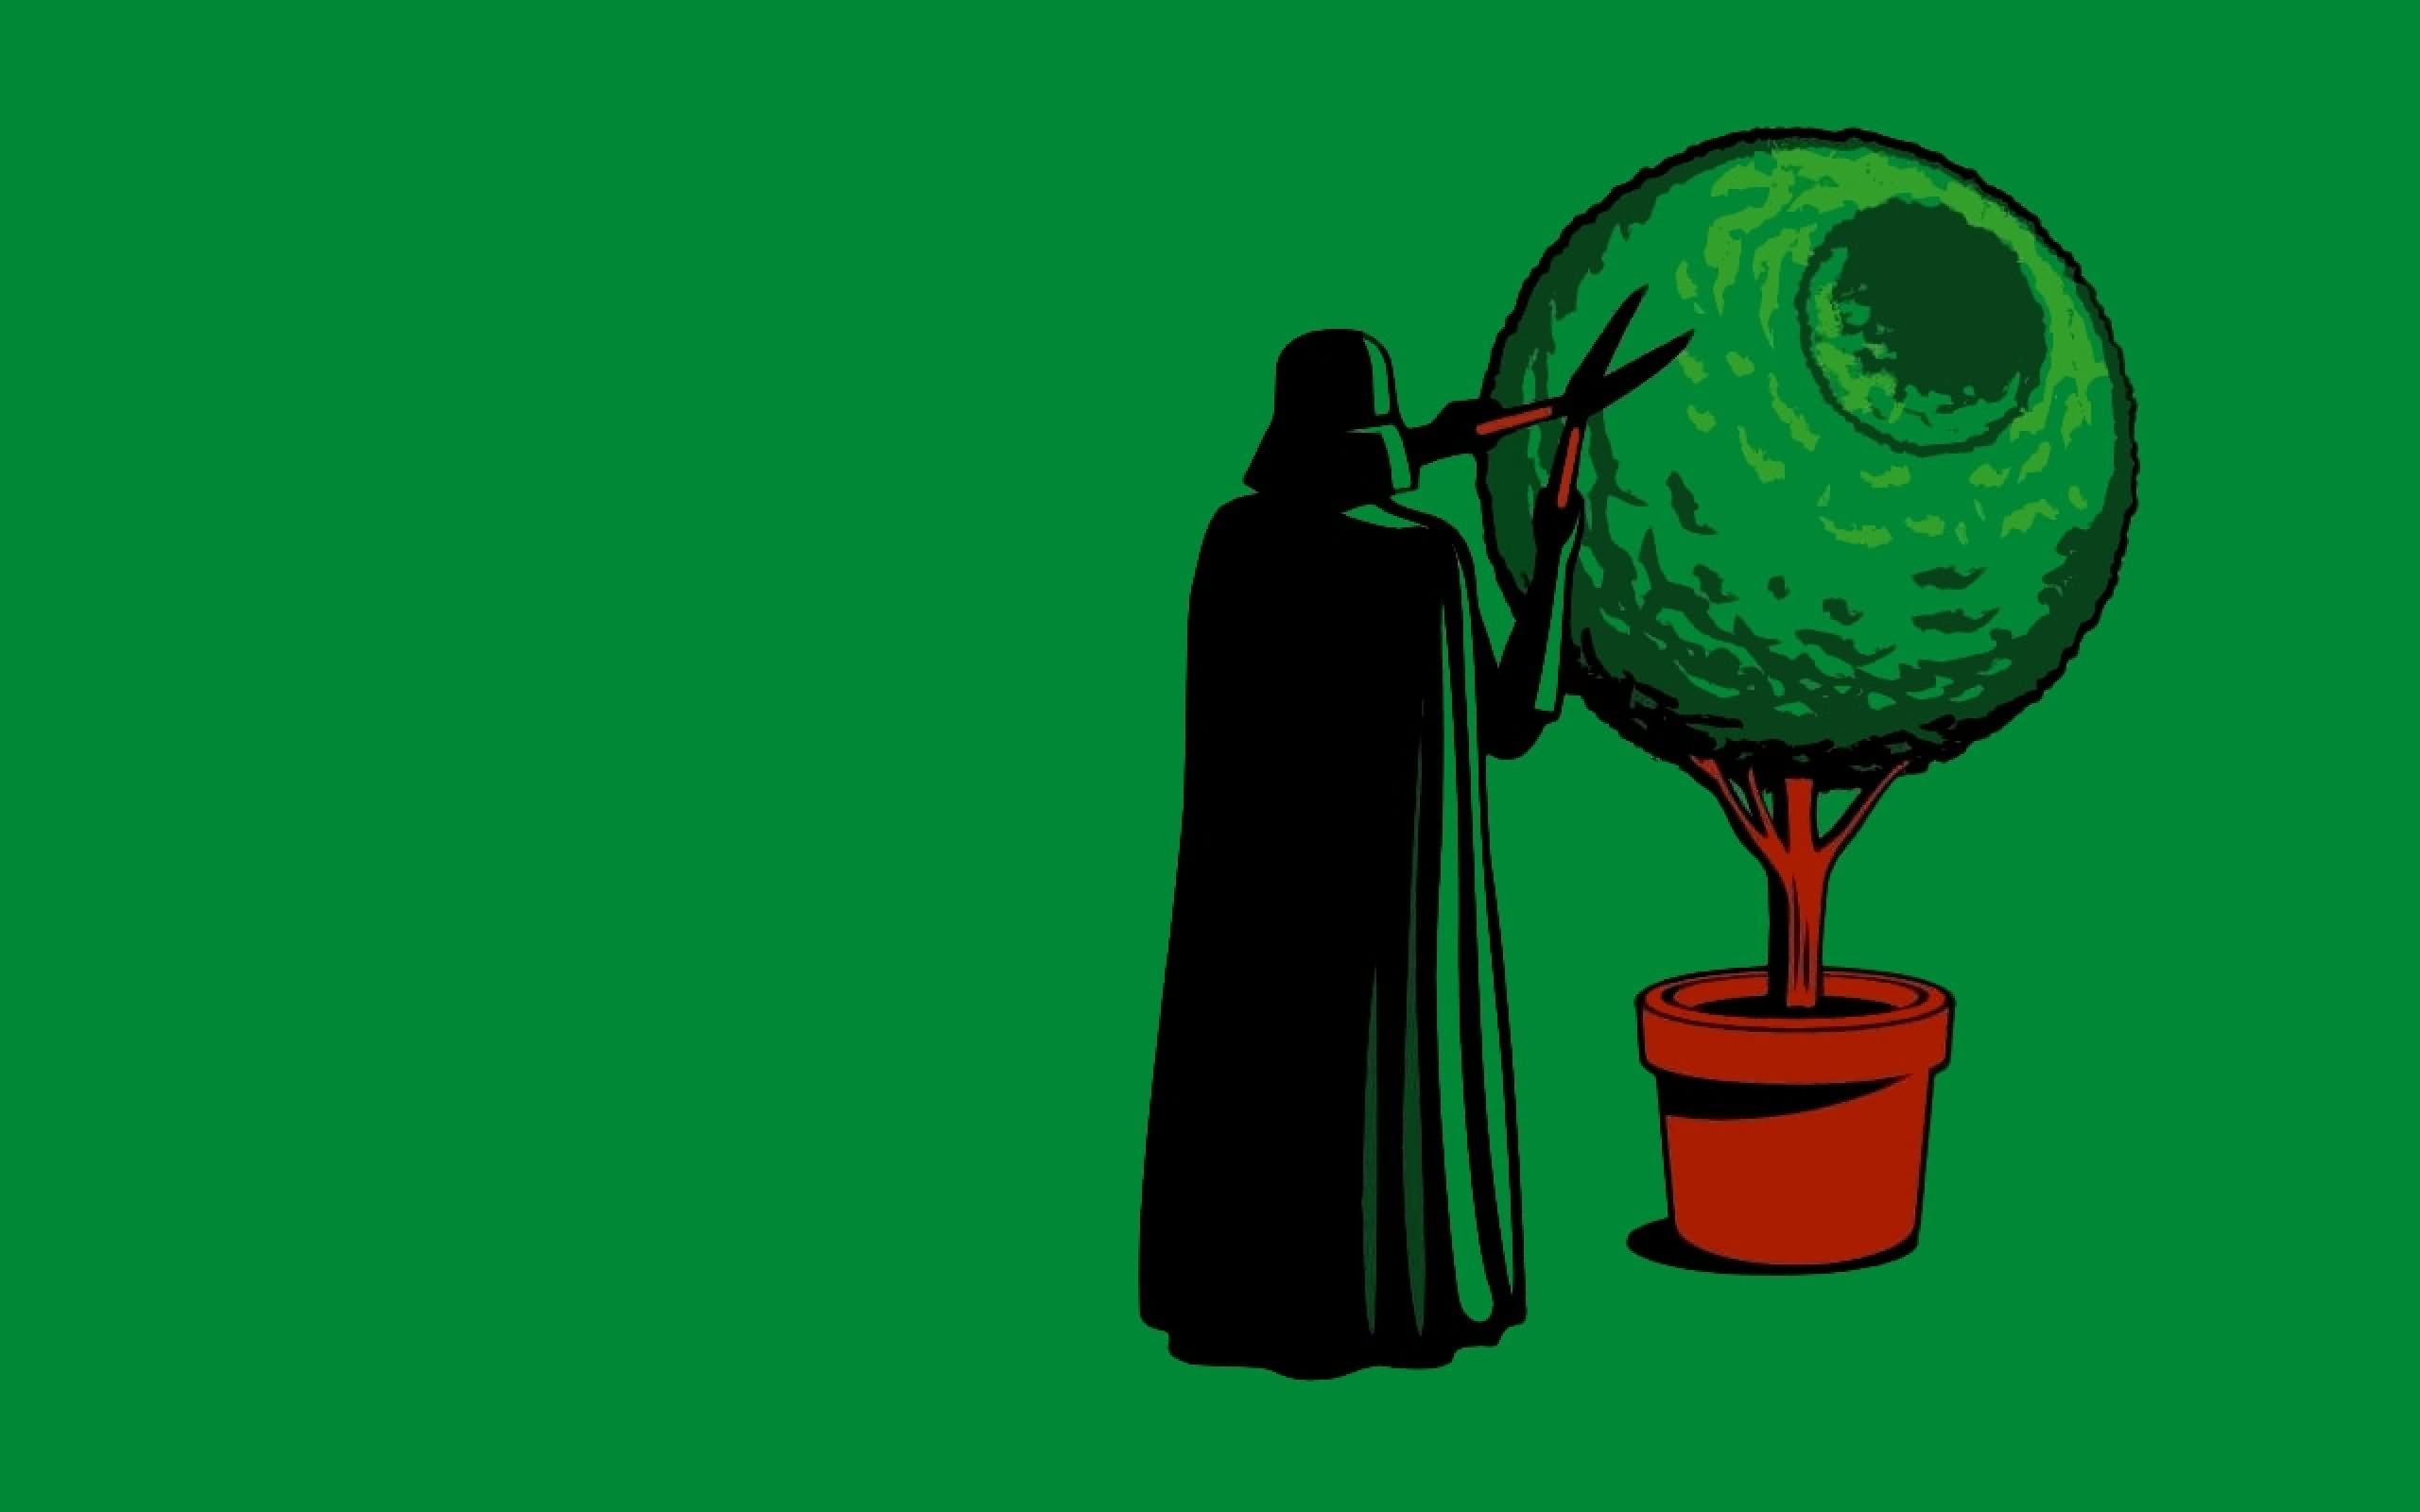 Funny Gardener Star Wars Picture